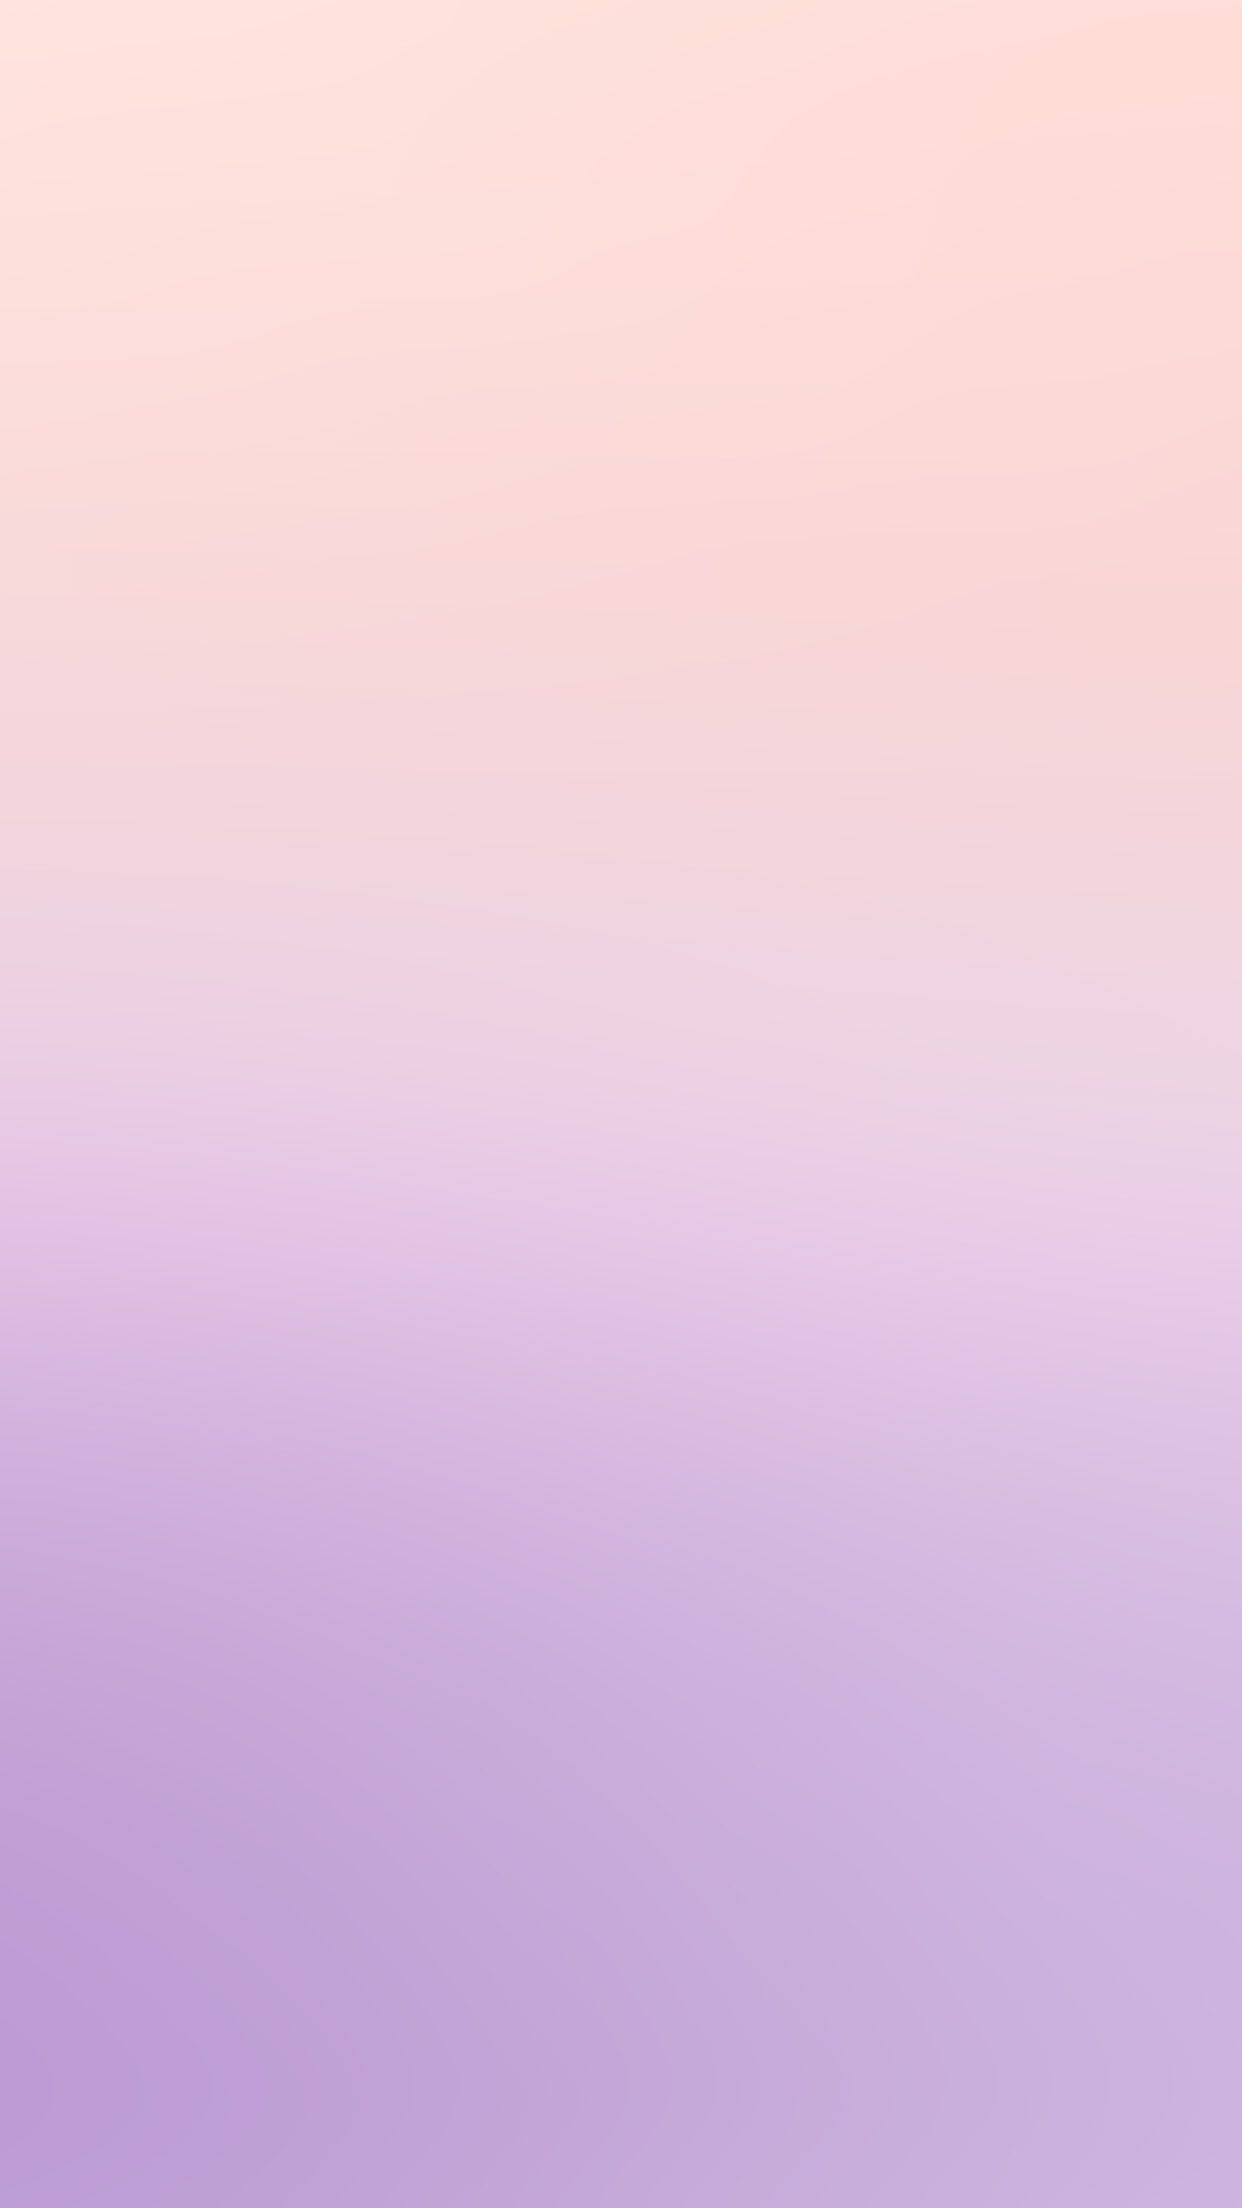 A pink and purple gradient image - Pastel purple, light purple